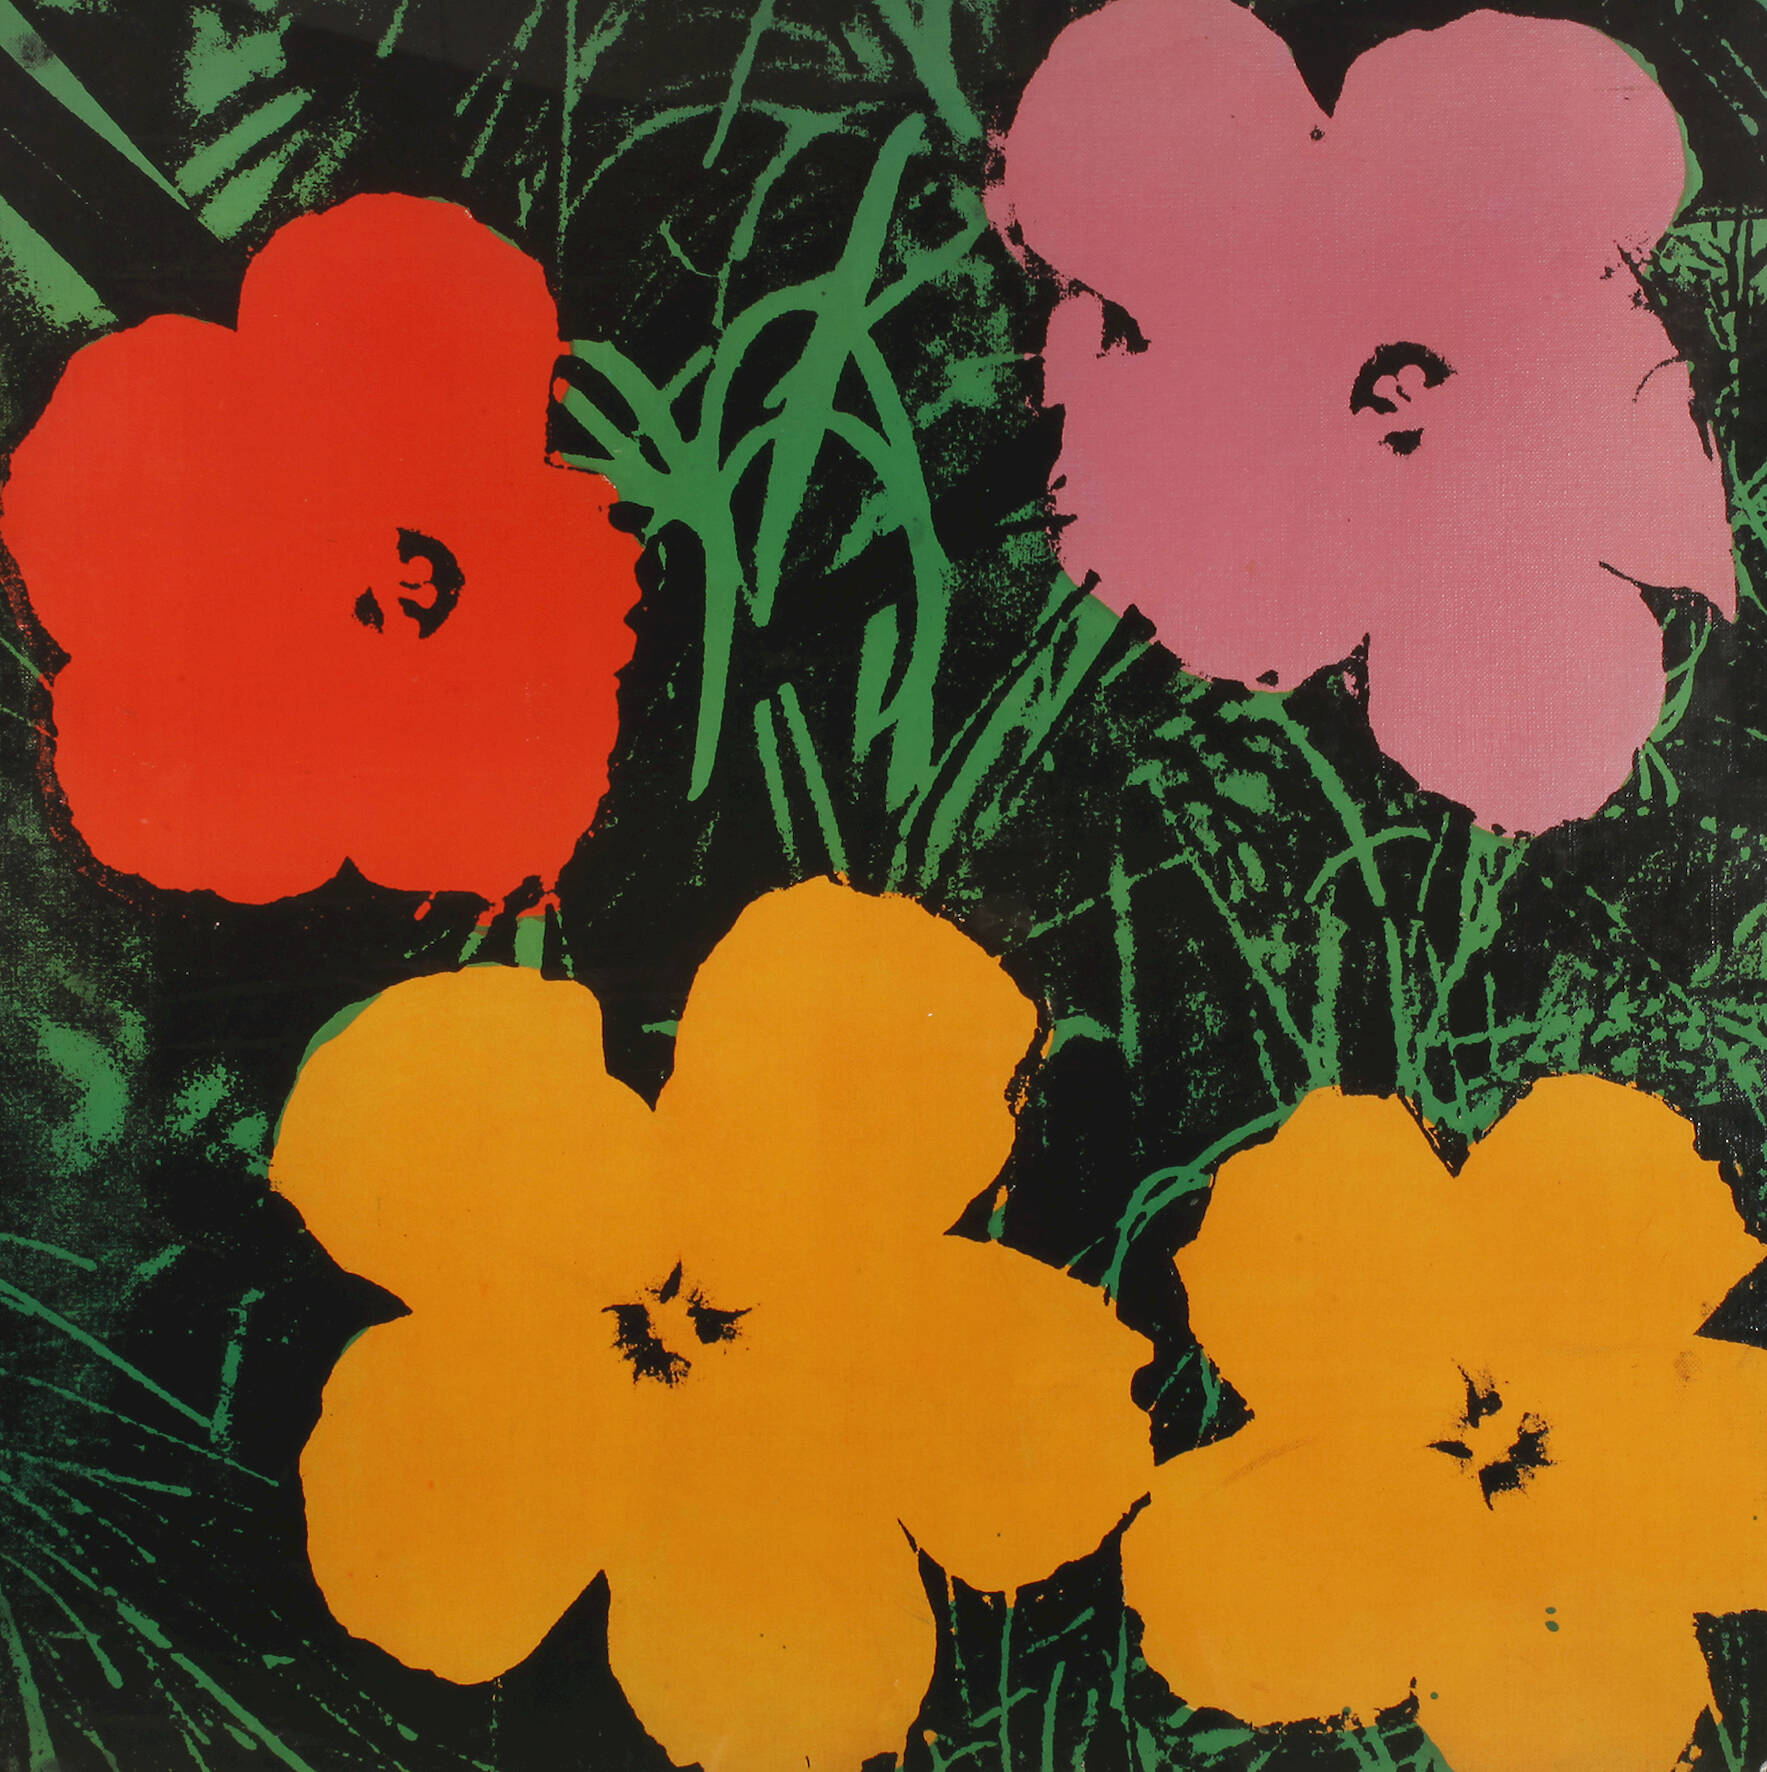 nach Andy Warhol, "Flowers"